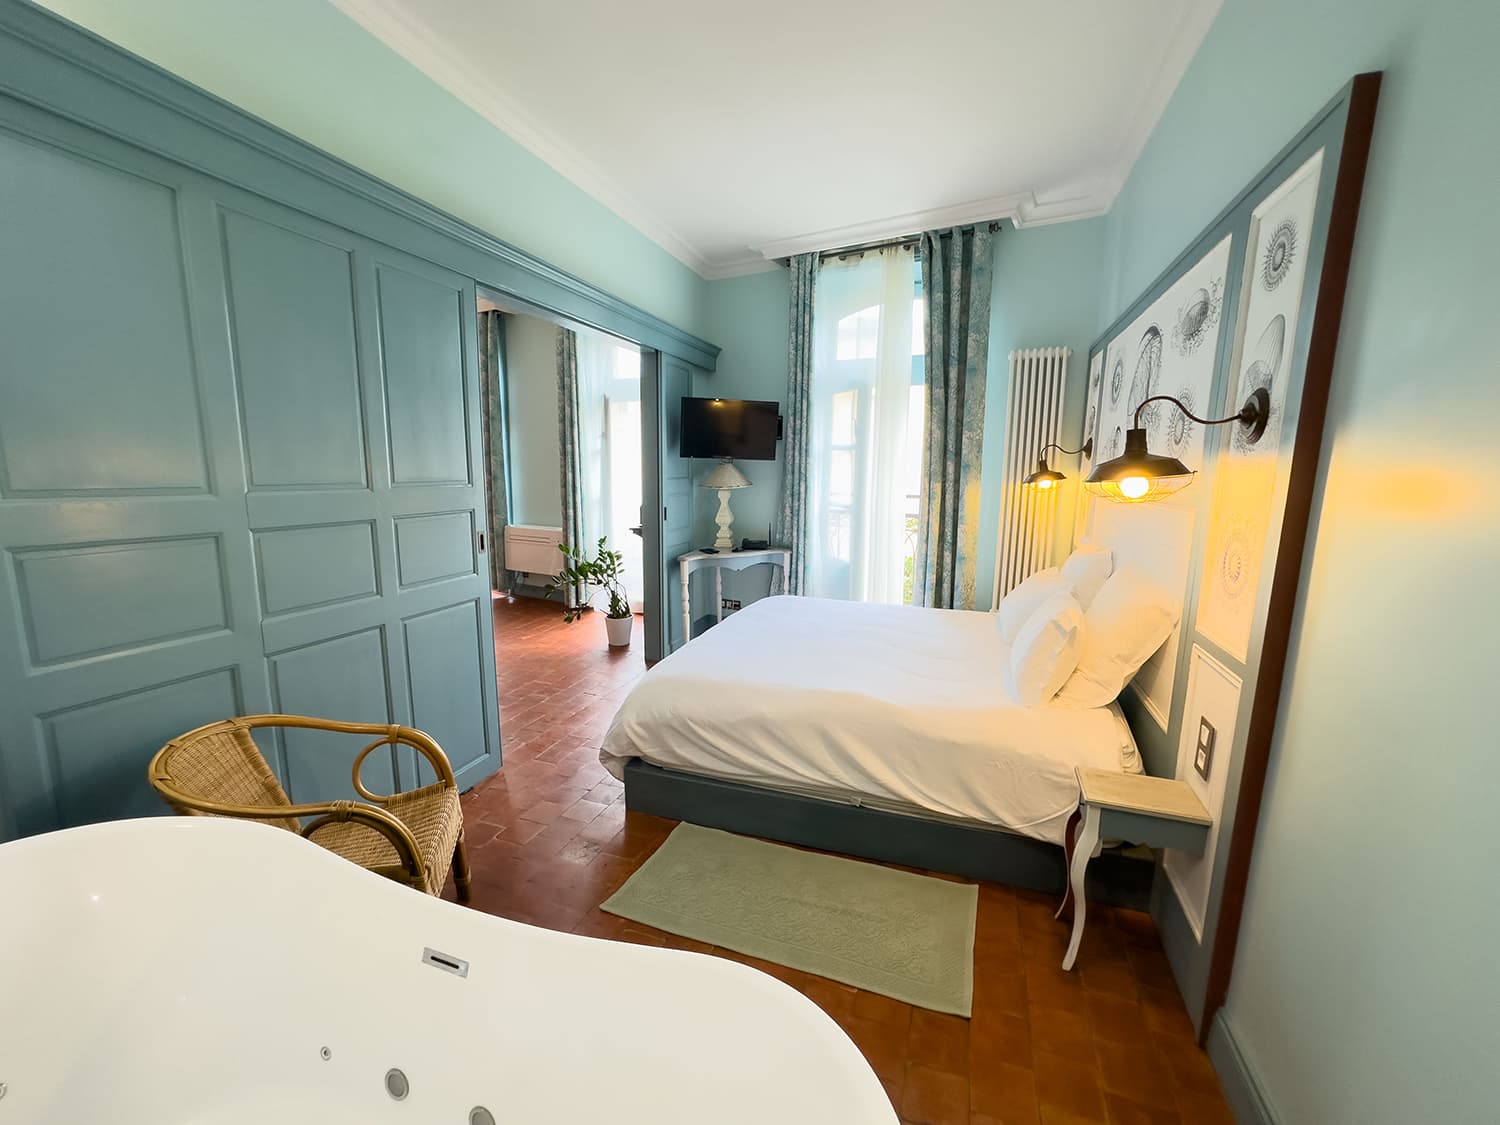 Bedroom | Rental apartment, Pézenas, Occitanie